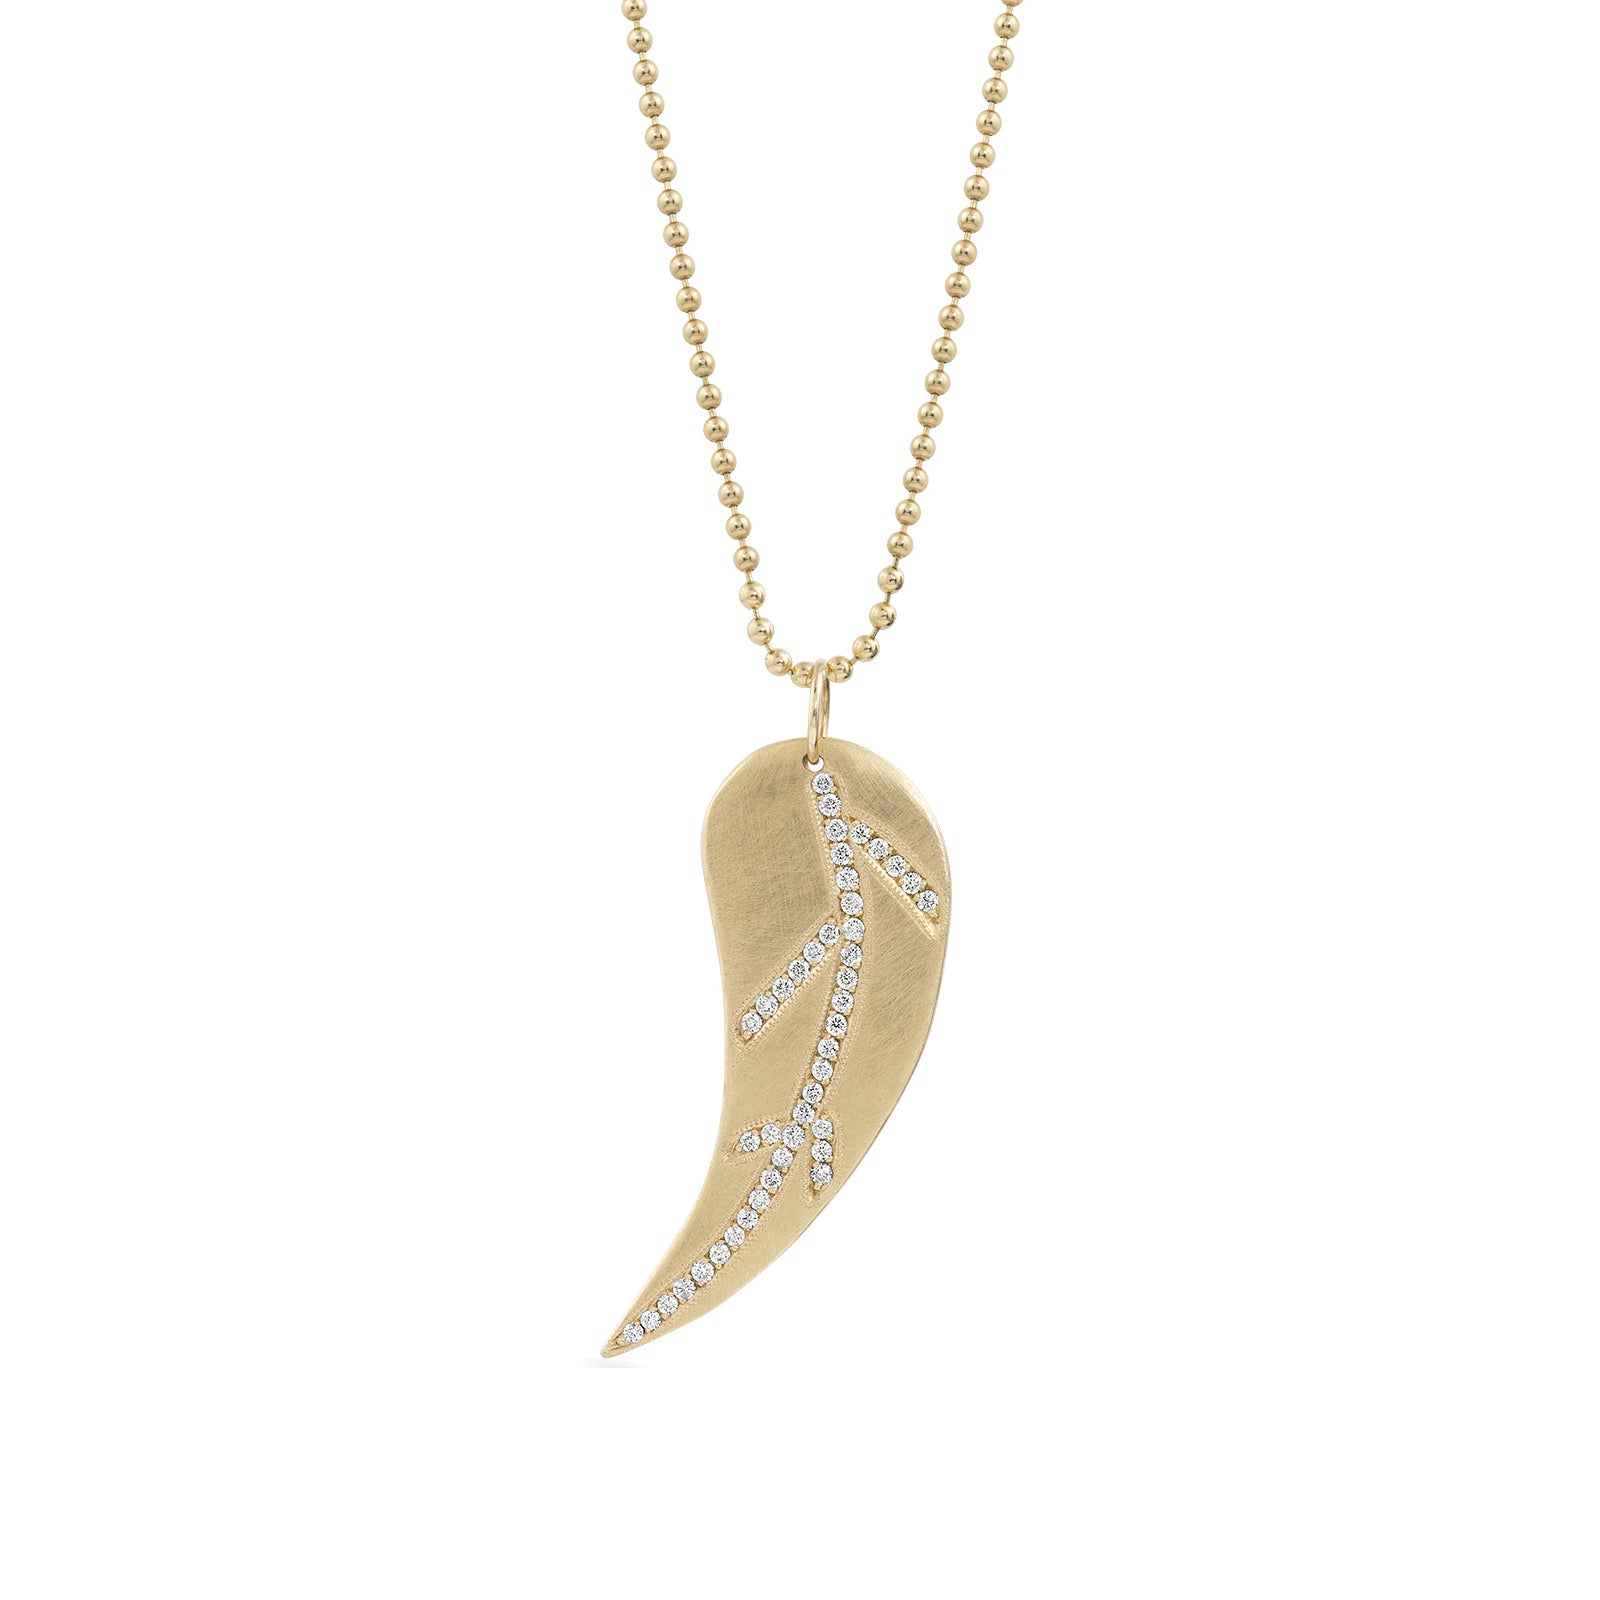 14k yellow gold large ARLA leaf pendant with diamonds